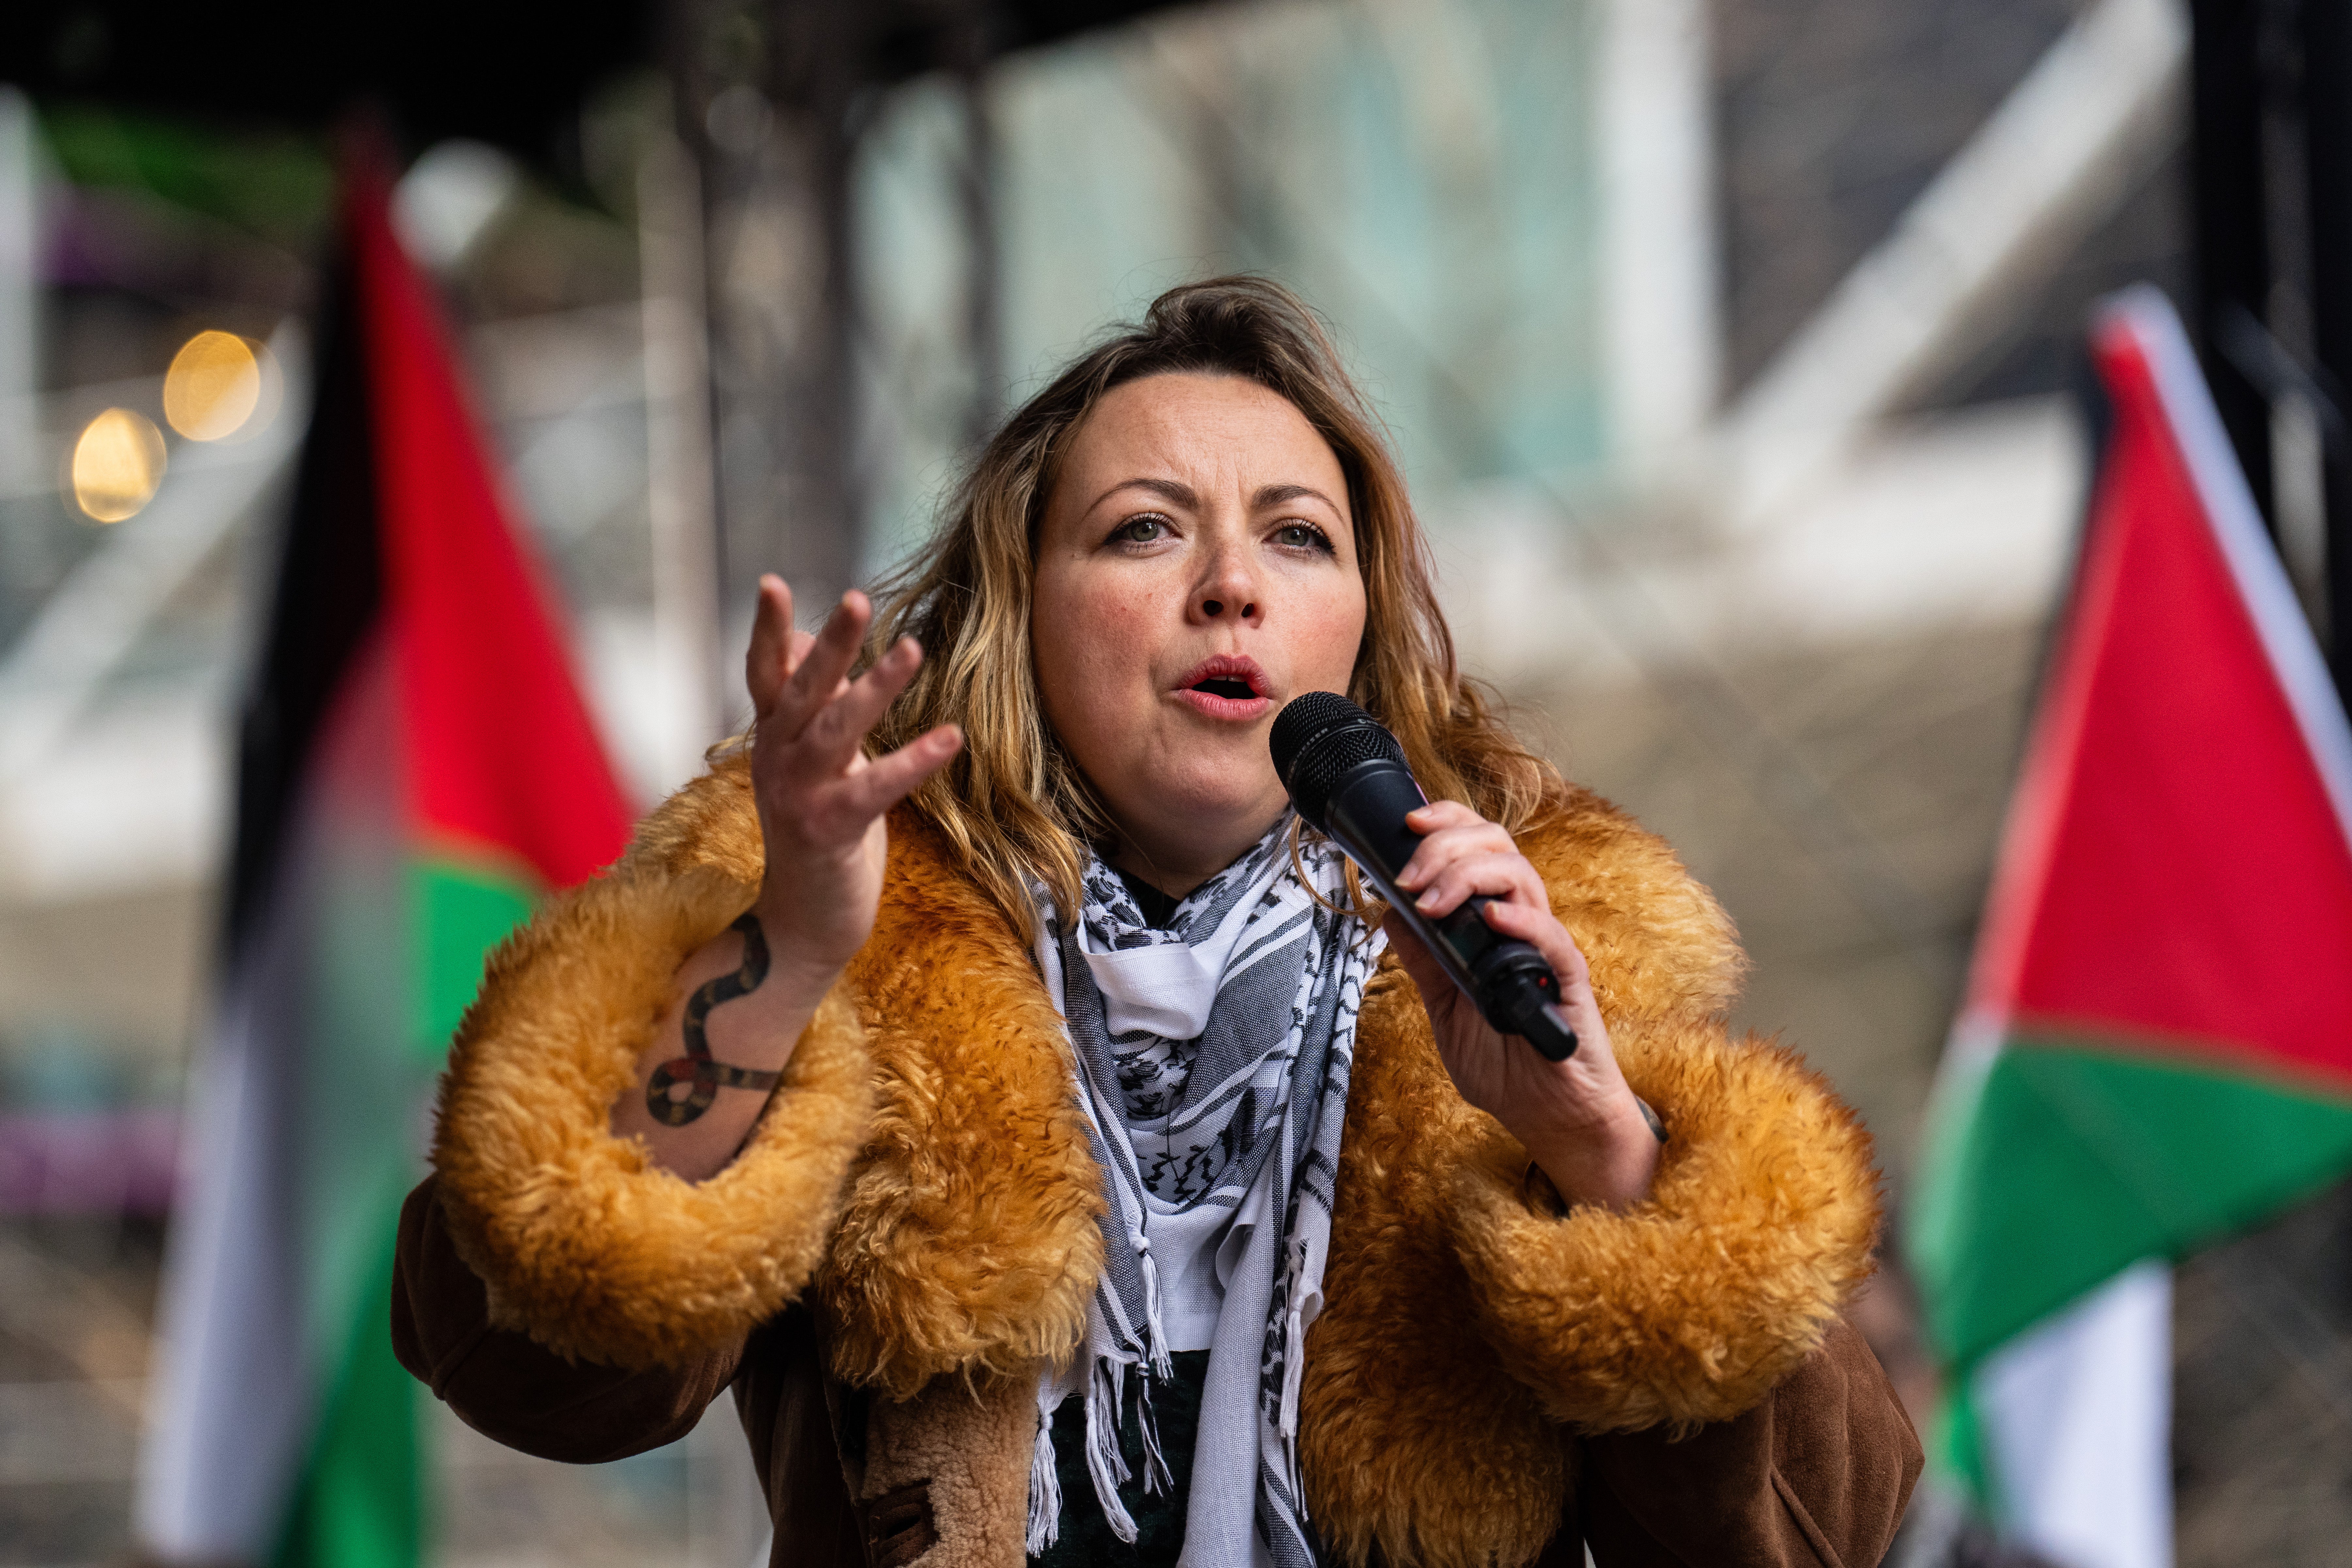 Charlotte Church previously spoke at a pro-Palestine rally in London